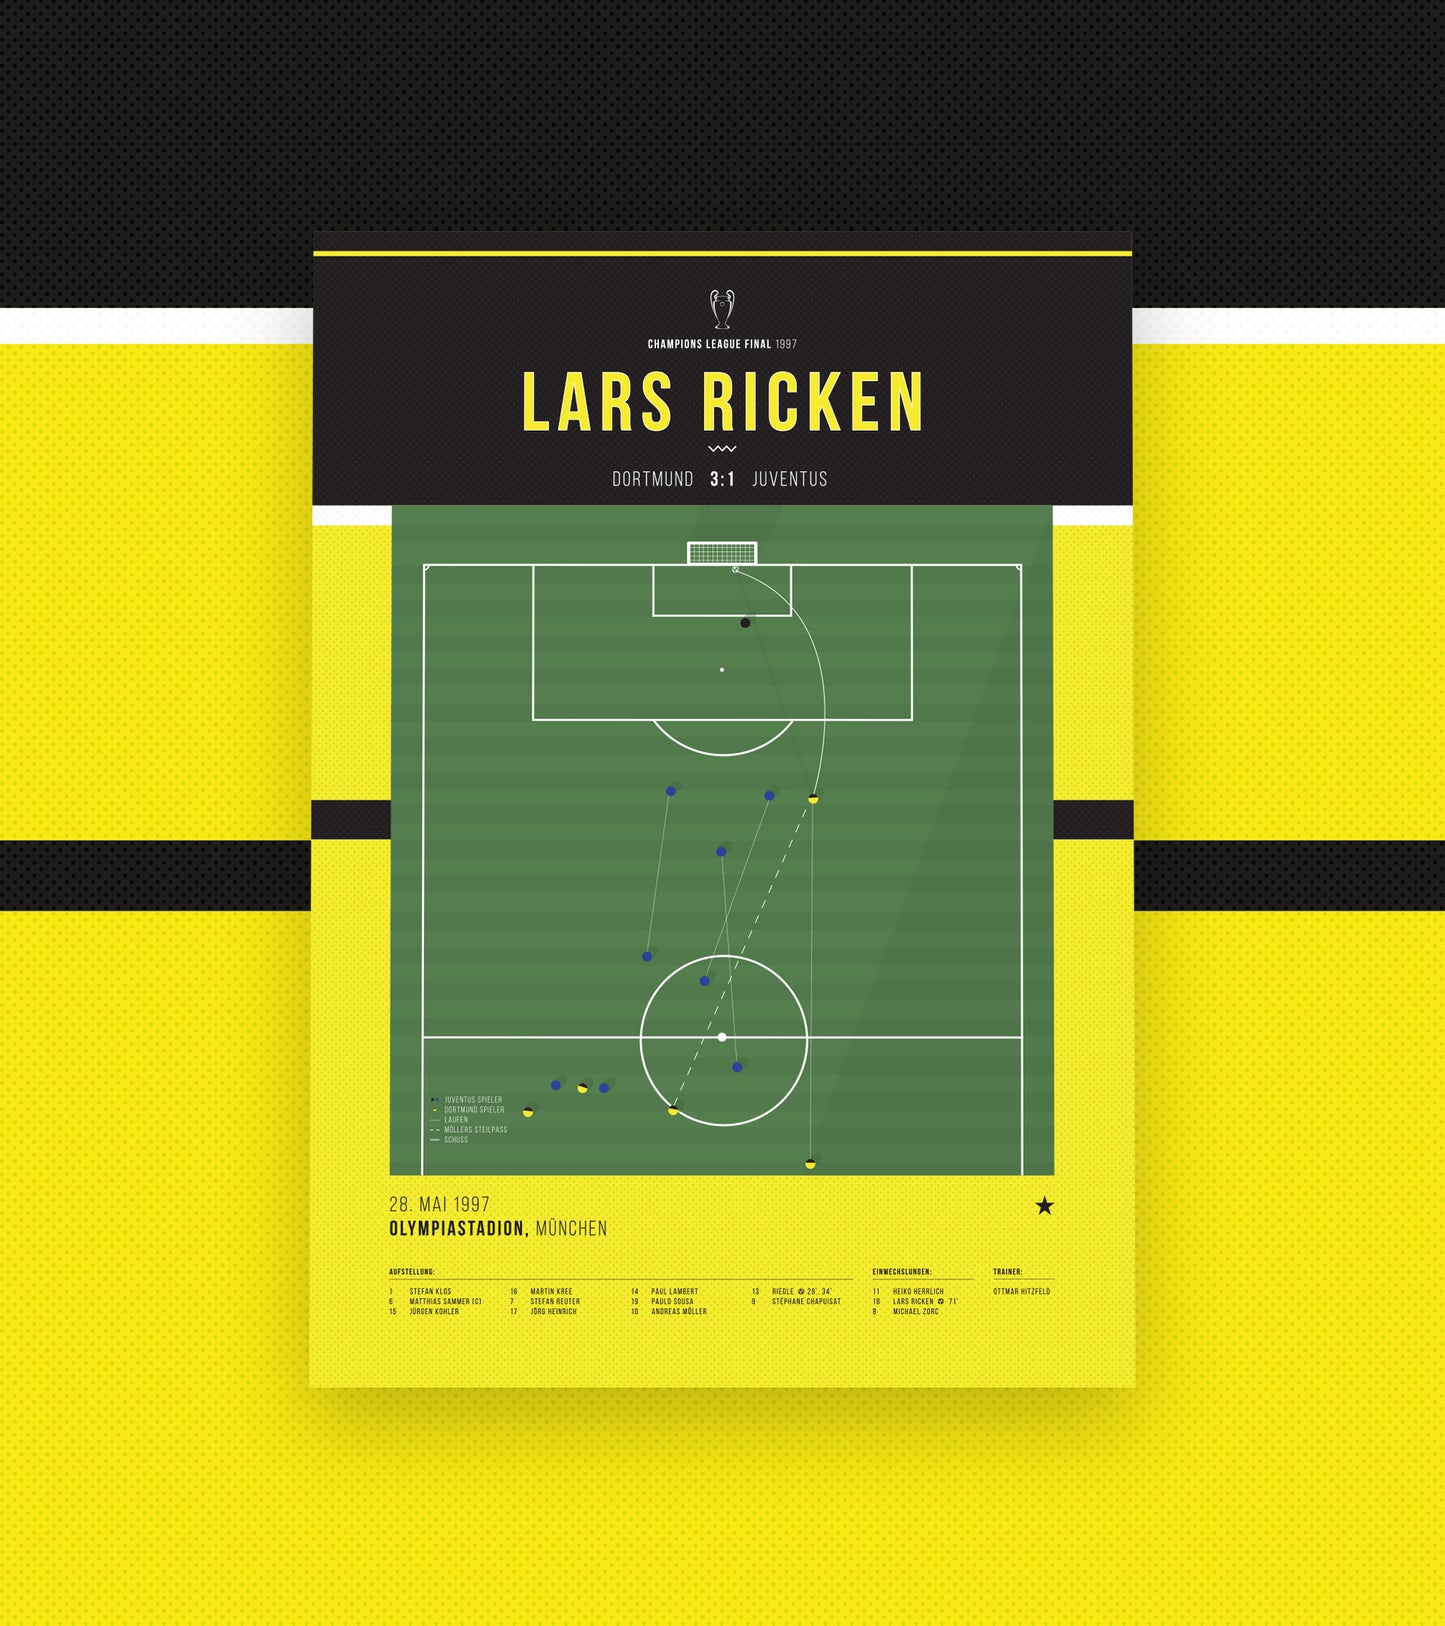 Lars Ricken anota un gol maravilloso para sorprender a la Juventus en 1997